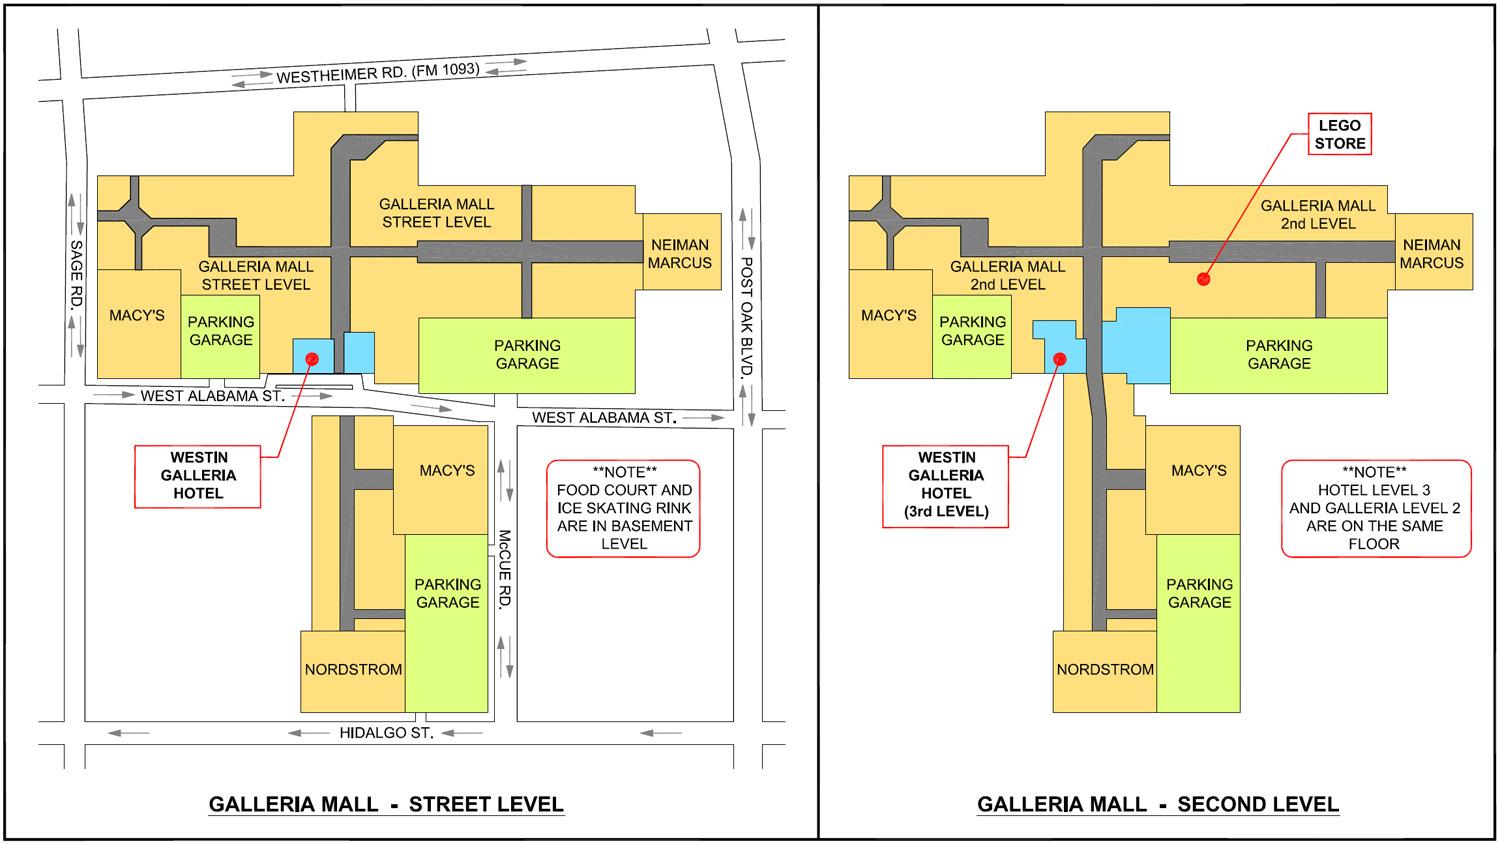 Galleria mall map - Houston Galleria mall map (Texas - USA)